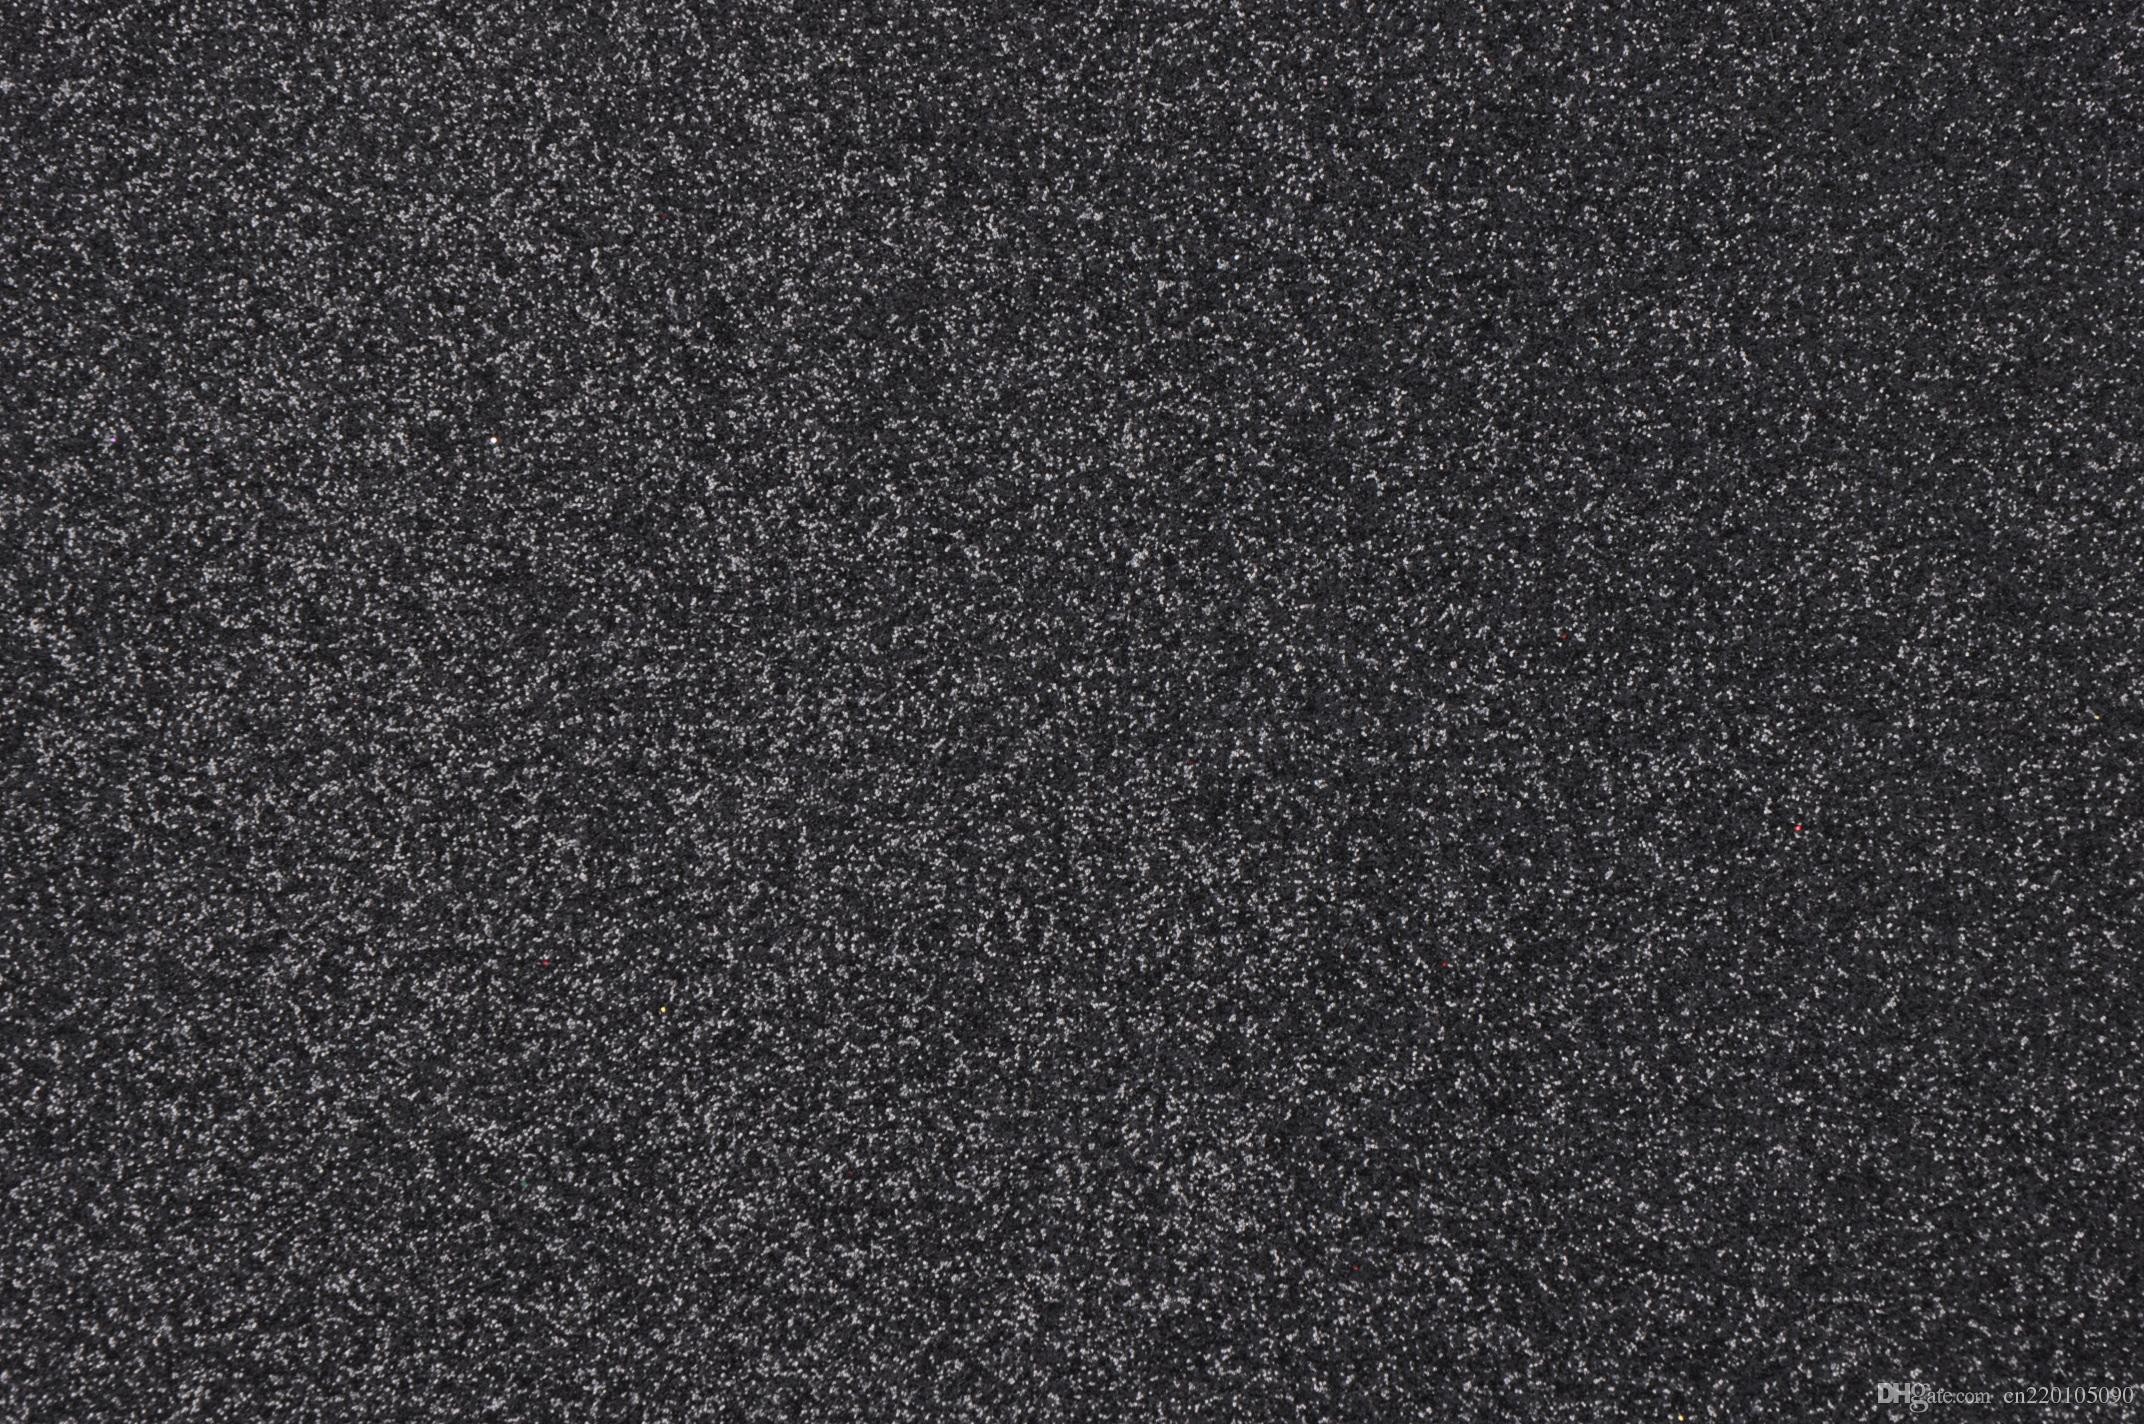 2144x1424 JC Pack Eco-friendly Gunmetal Glitter Fabric ,popular Glitter Fabric ,teal  Blue Glitter Fabric Glitter Wallpaper 15m/roll Popular Glitter Fabric  Gunmetal ...